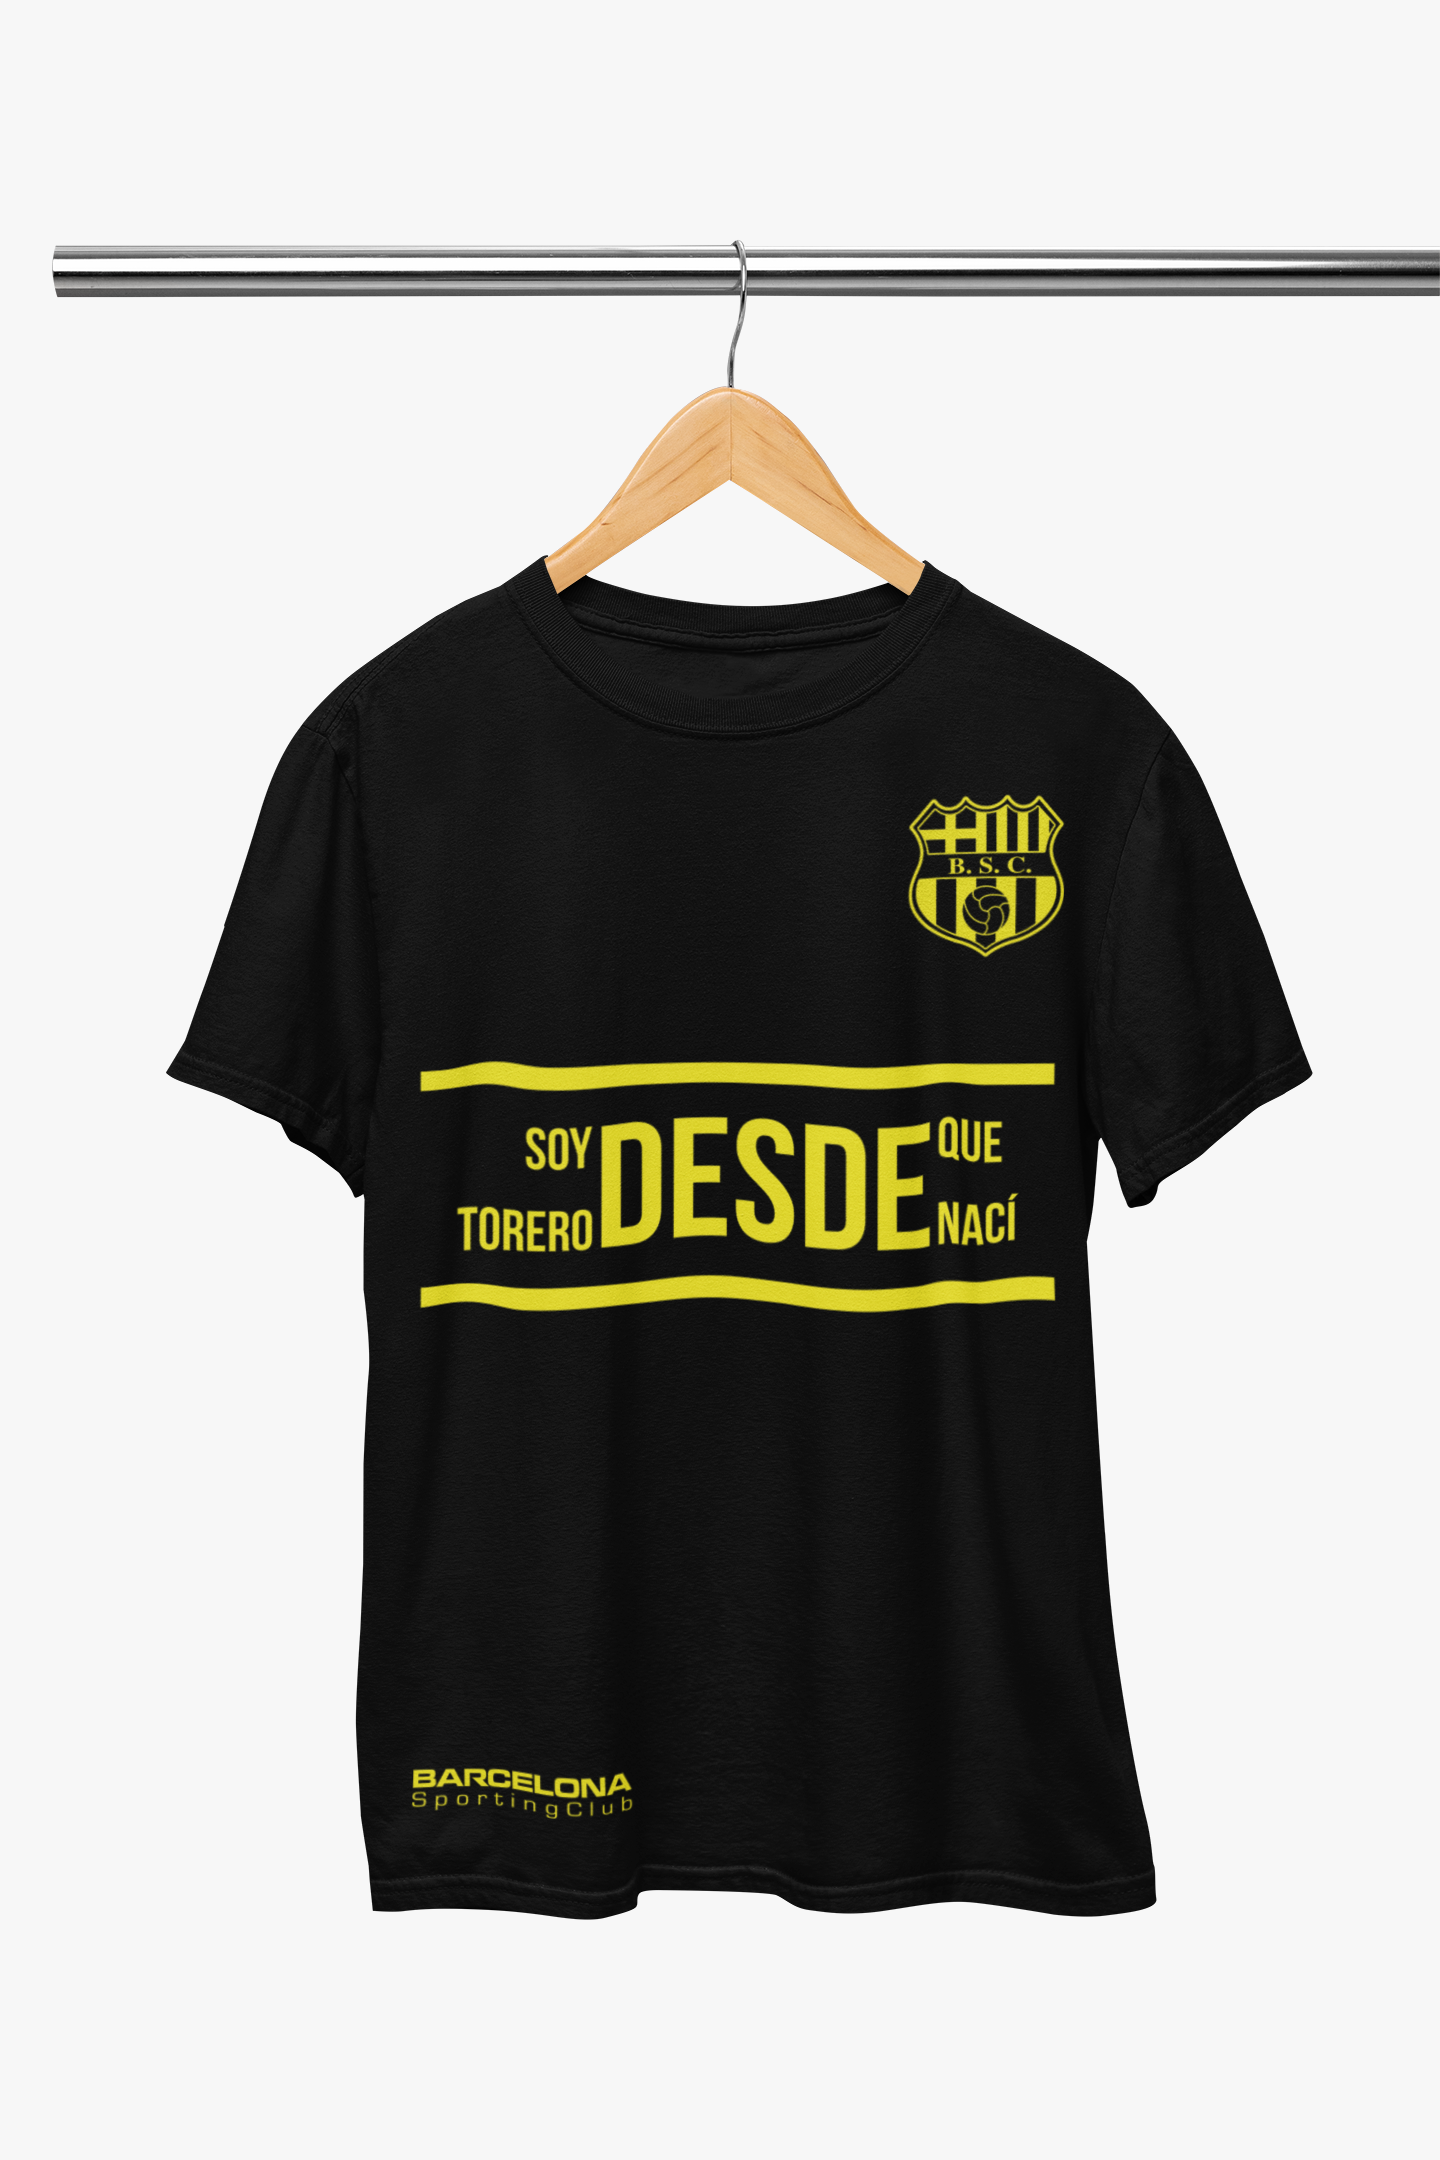 Camiseta unisex algodon Barcelona Sporting Club